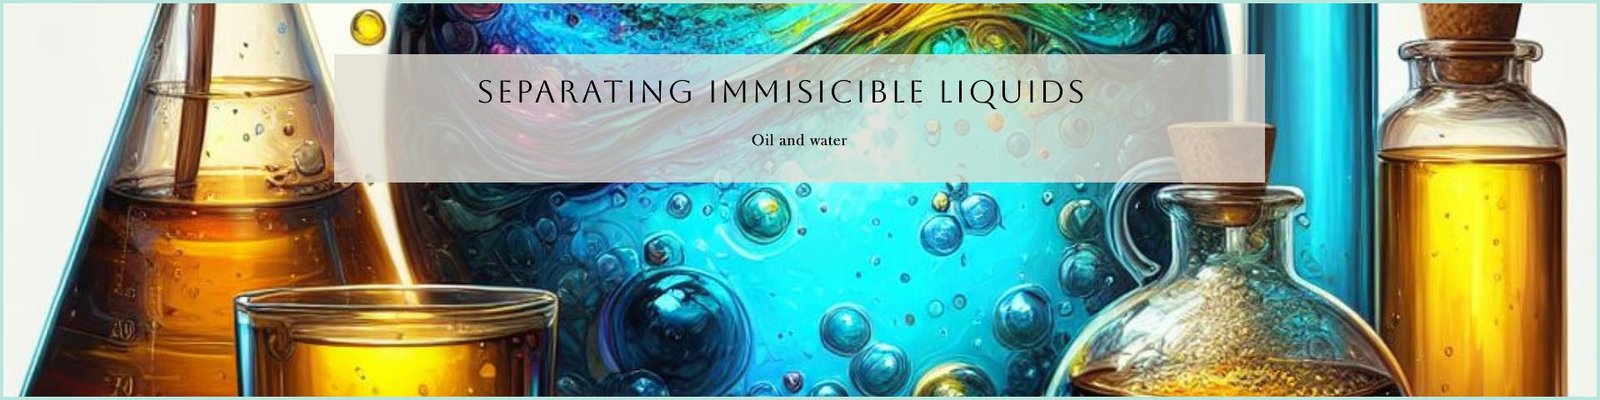 immisicble liquids heading